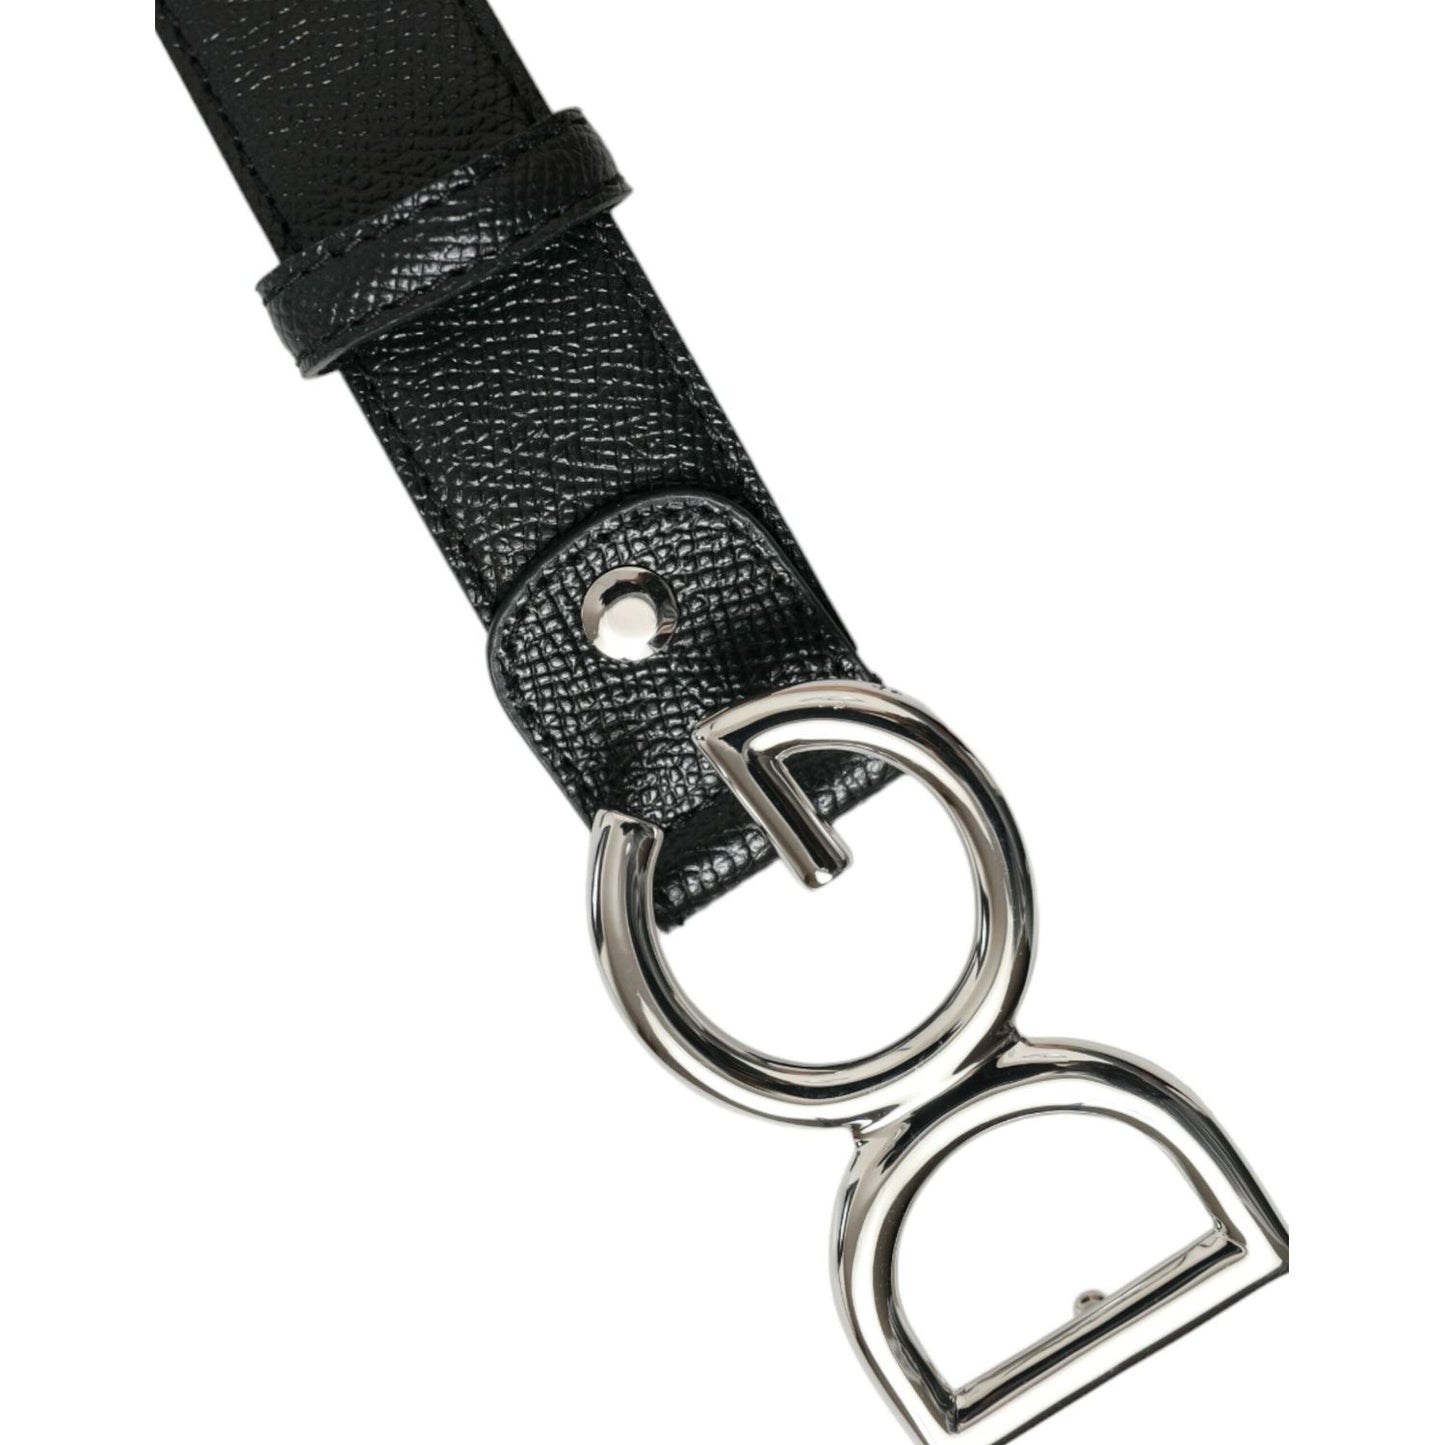 Dolce & Gabbana Elegant Black Leather Waist Belt with Logo Buckle elegant-black-leather-waist-belt-with-logo-buckle-1